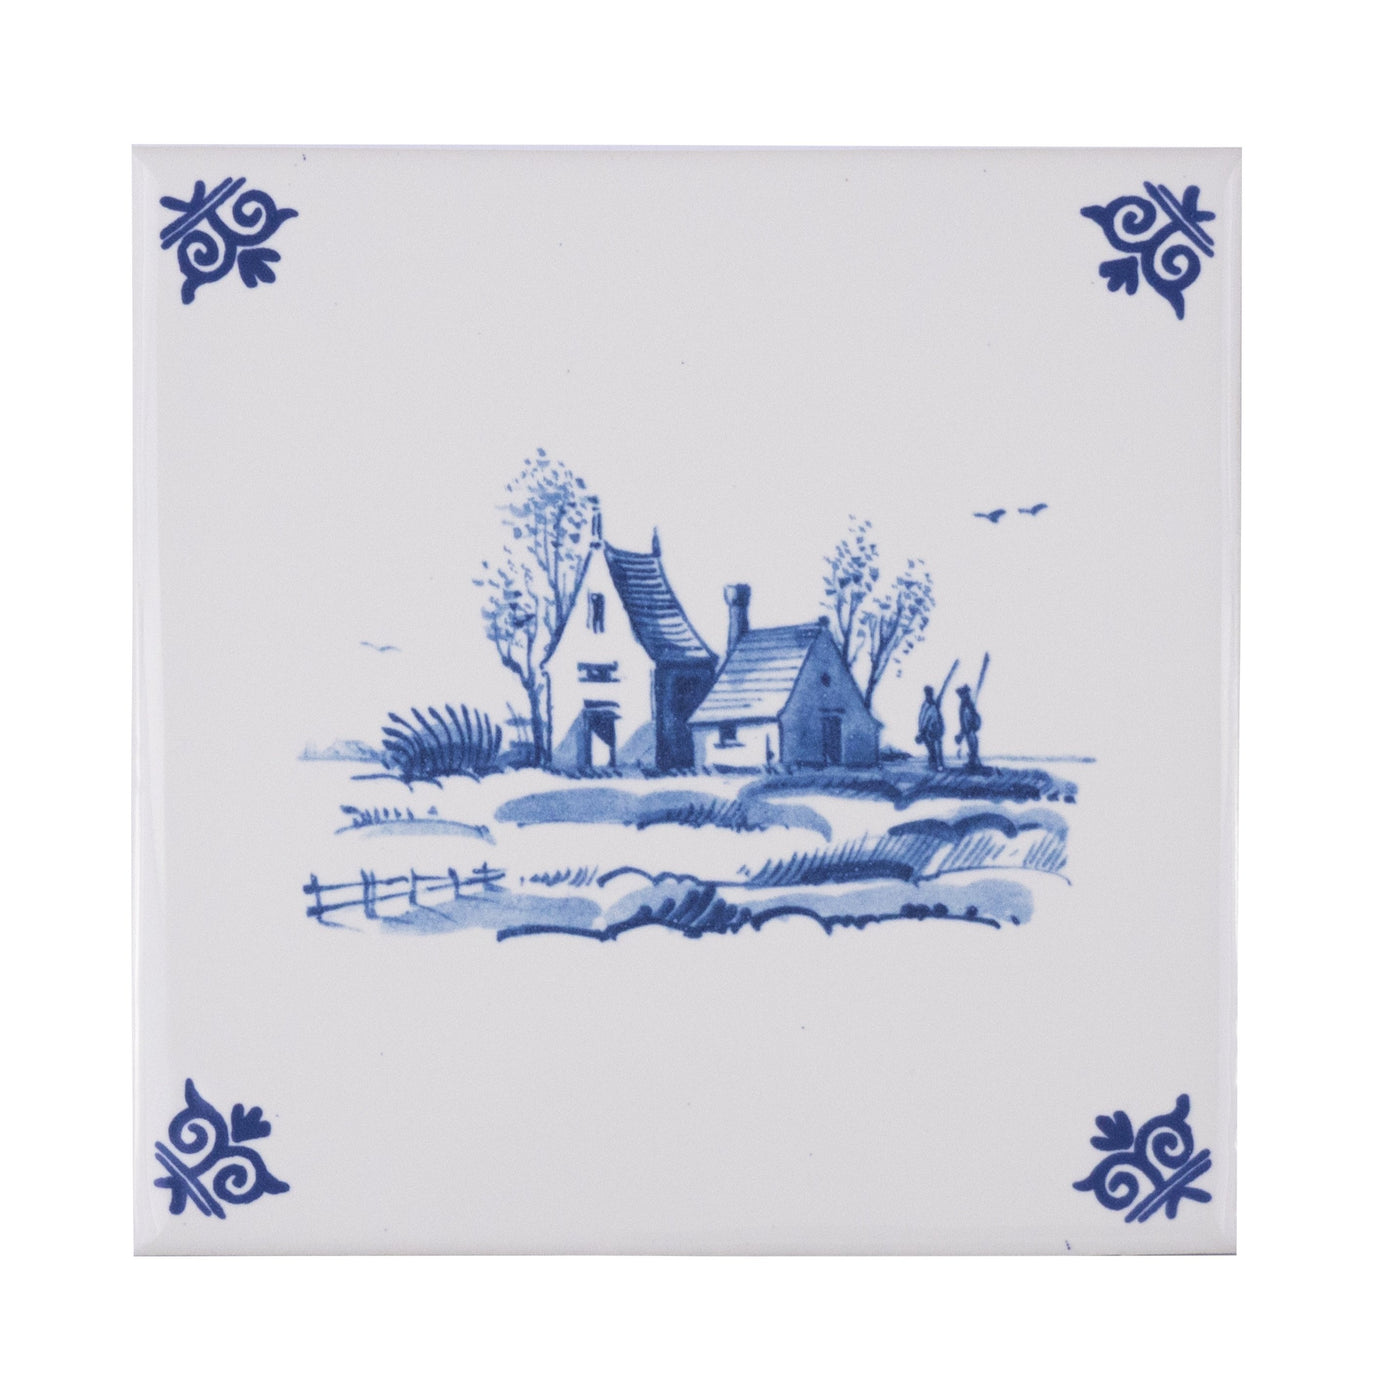 Tile Landscape (609) Delft Blue by Royal Delft